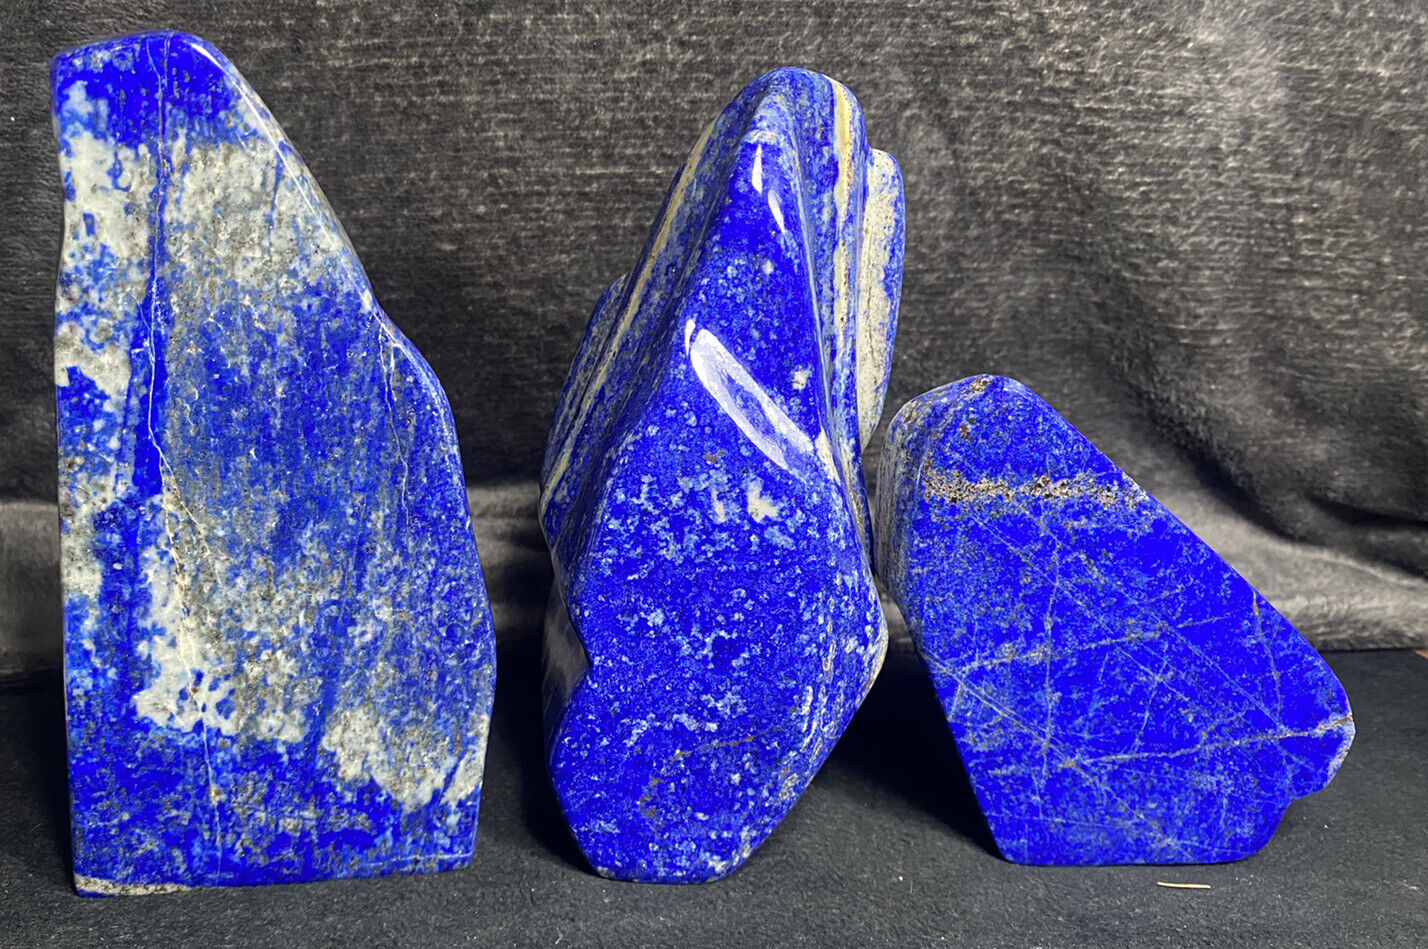 Lapis Lazuli free forms grade A geode 3.1kg 1PCs Crystals tumbles block bookend